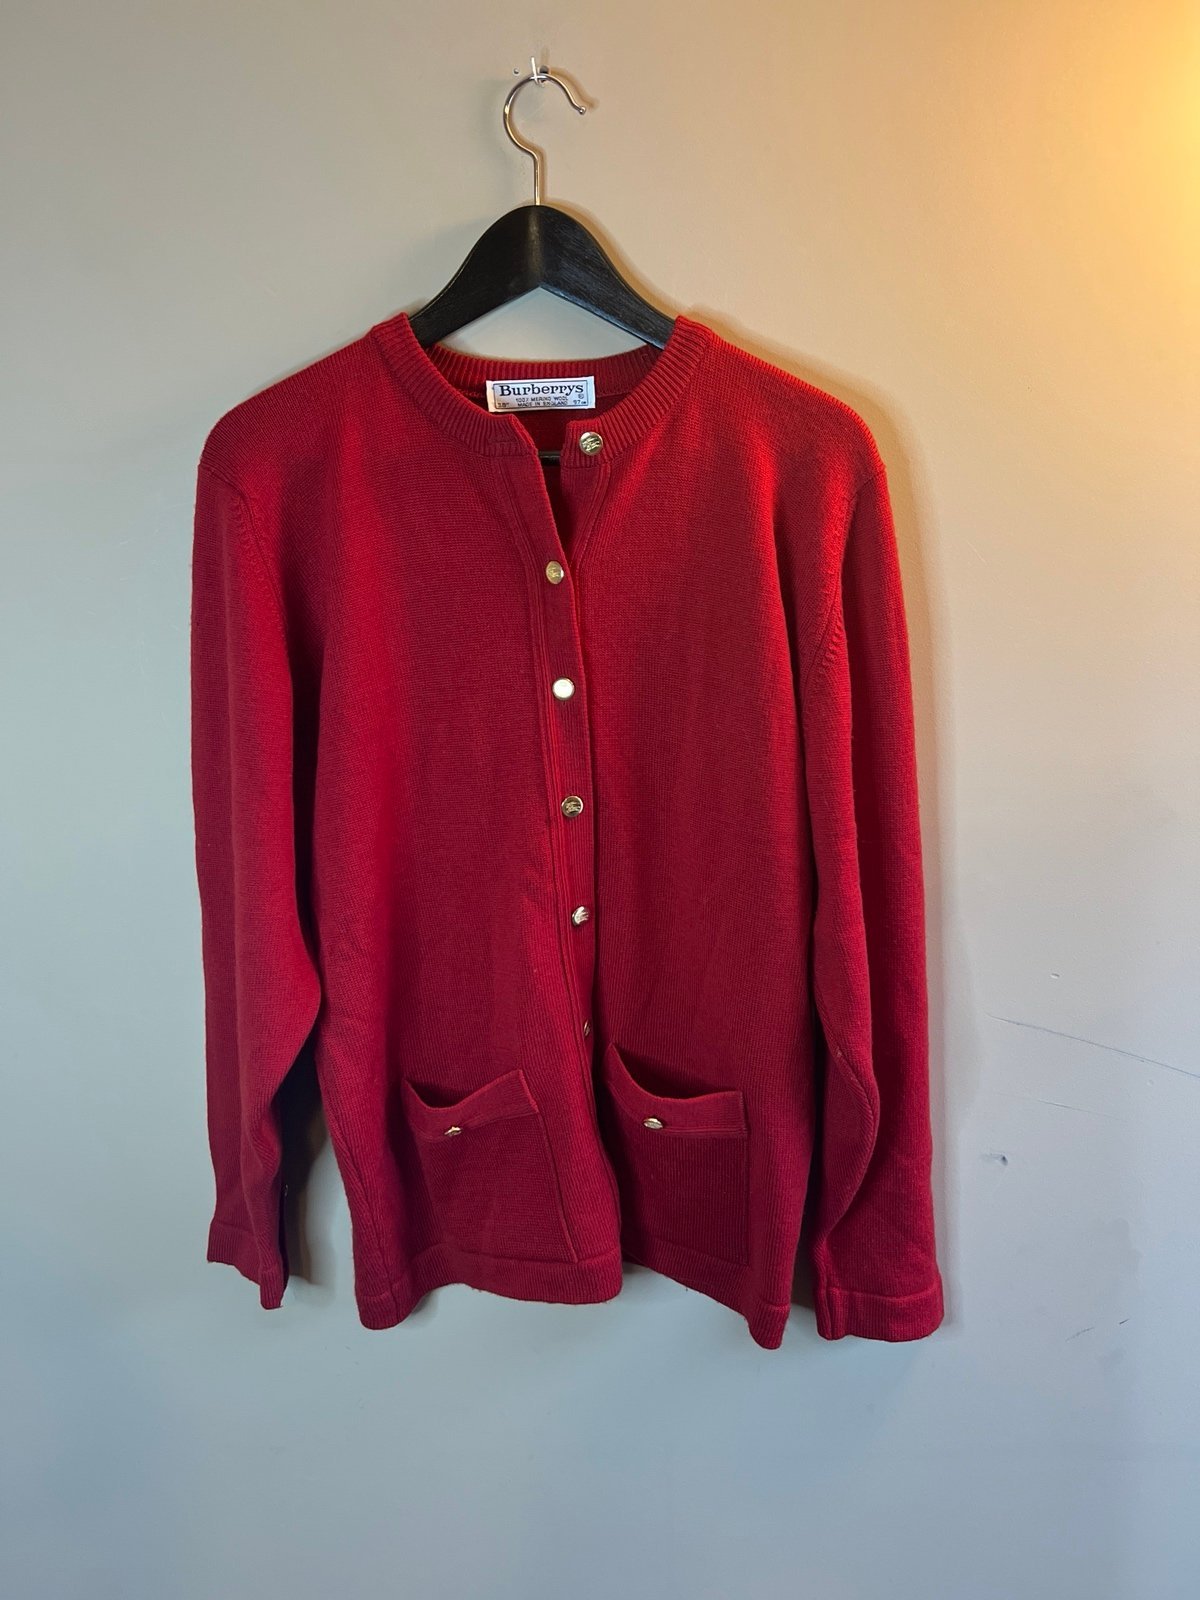 Amazing Vintage Burberry Merino Wool Cardigan Sweater - Womens 38 / US 4 jKt4BA0jy no tax